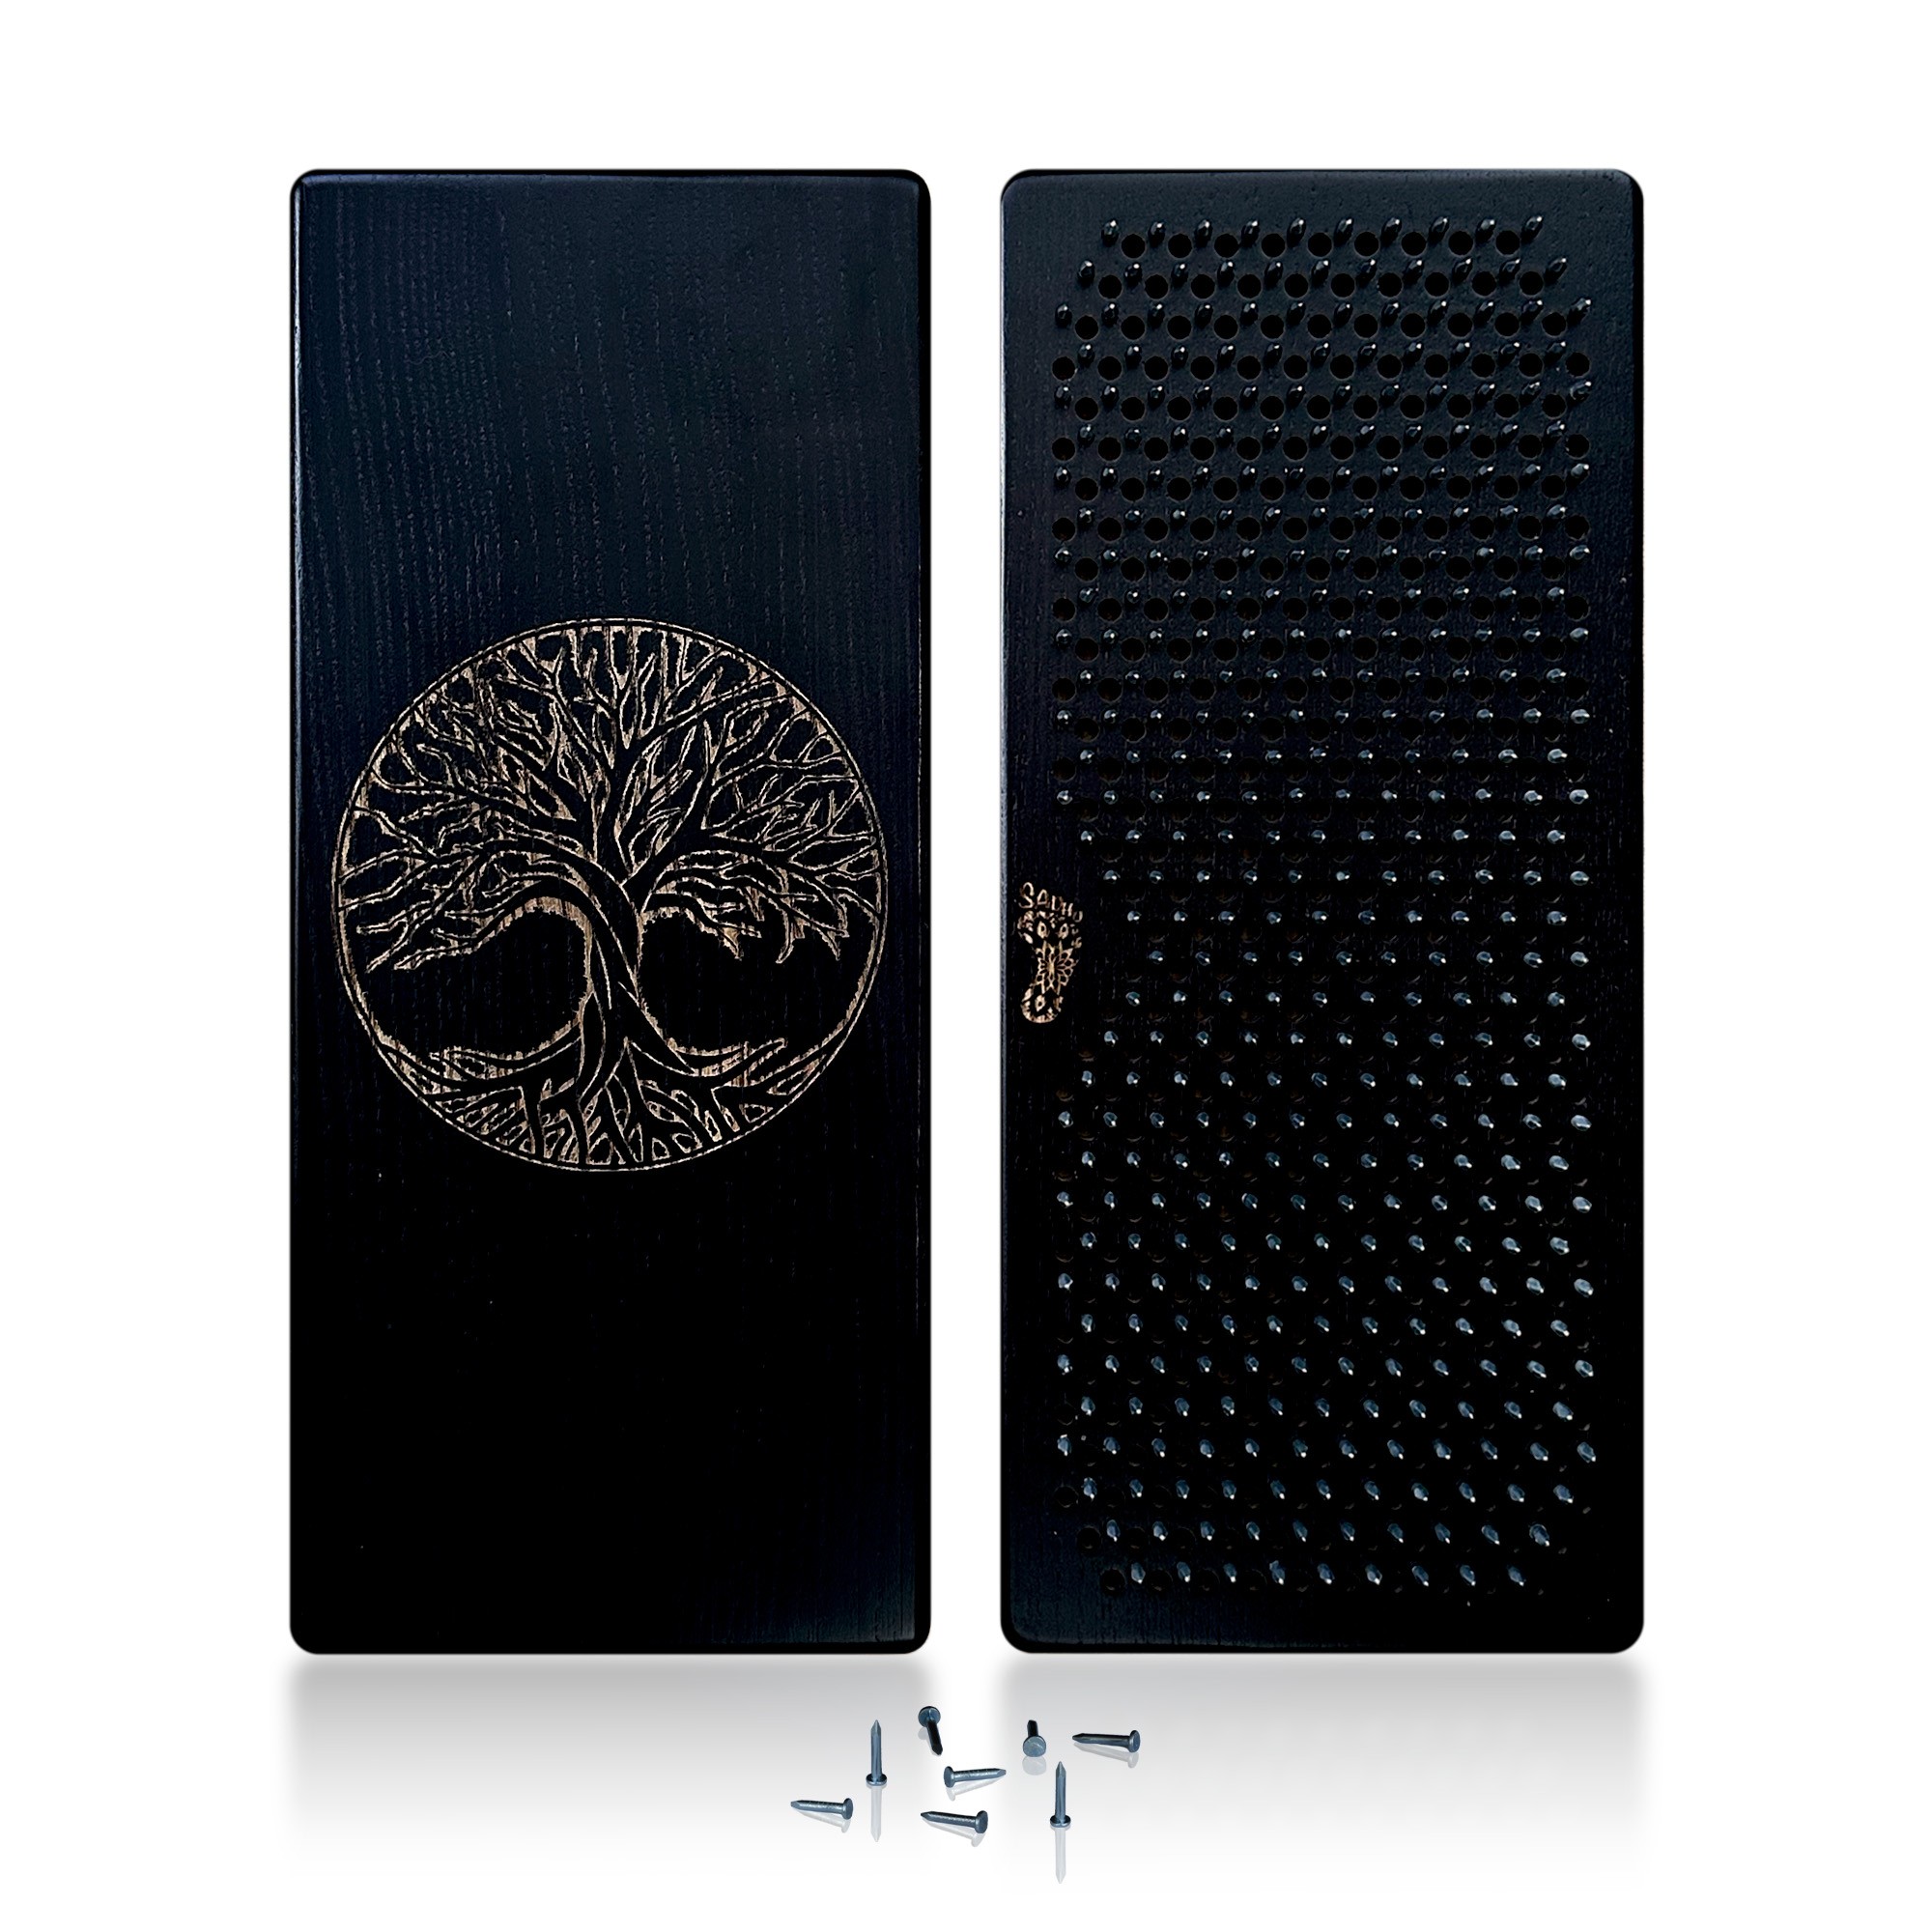 Sadhu Board Oh! SADHU for Yoga Meditation from 100% Natural Ash Wood, Step 10mm, "Tree of Life"(Black)